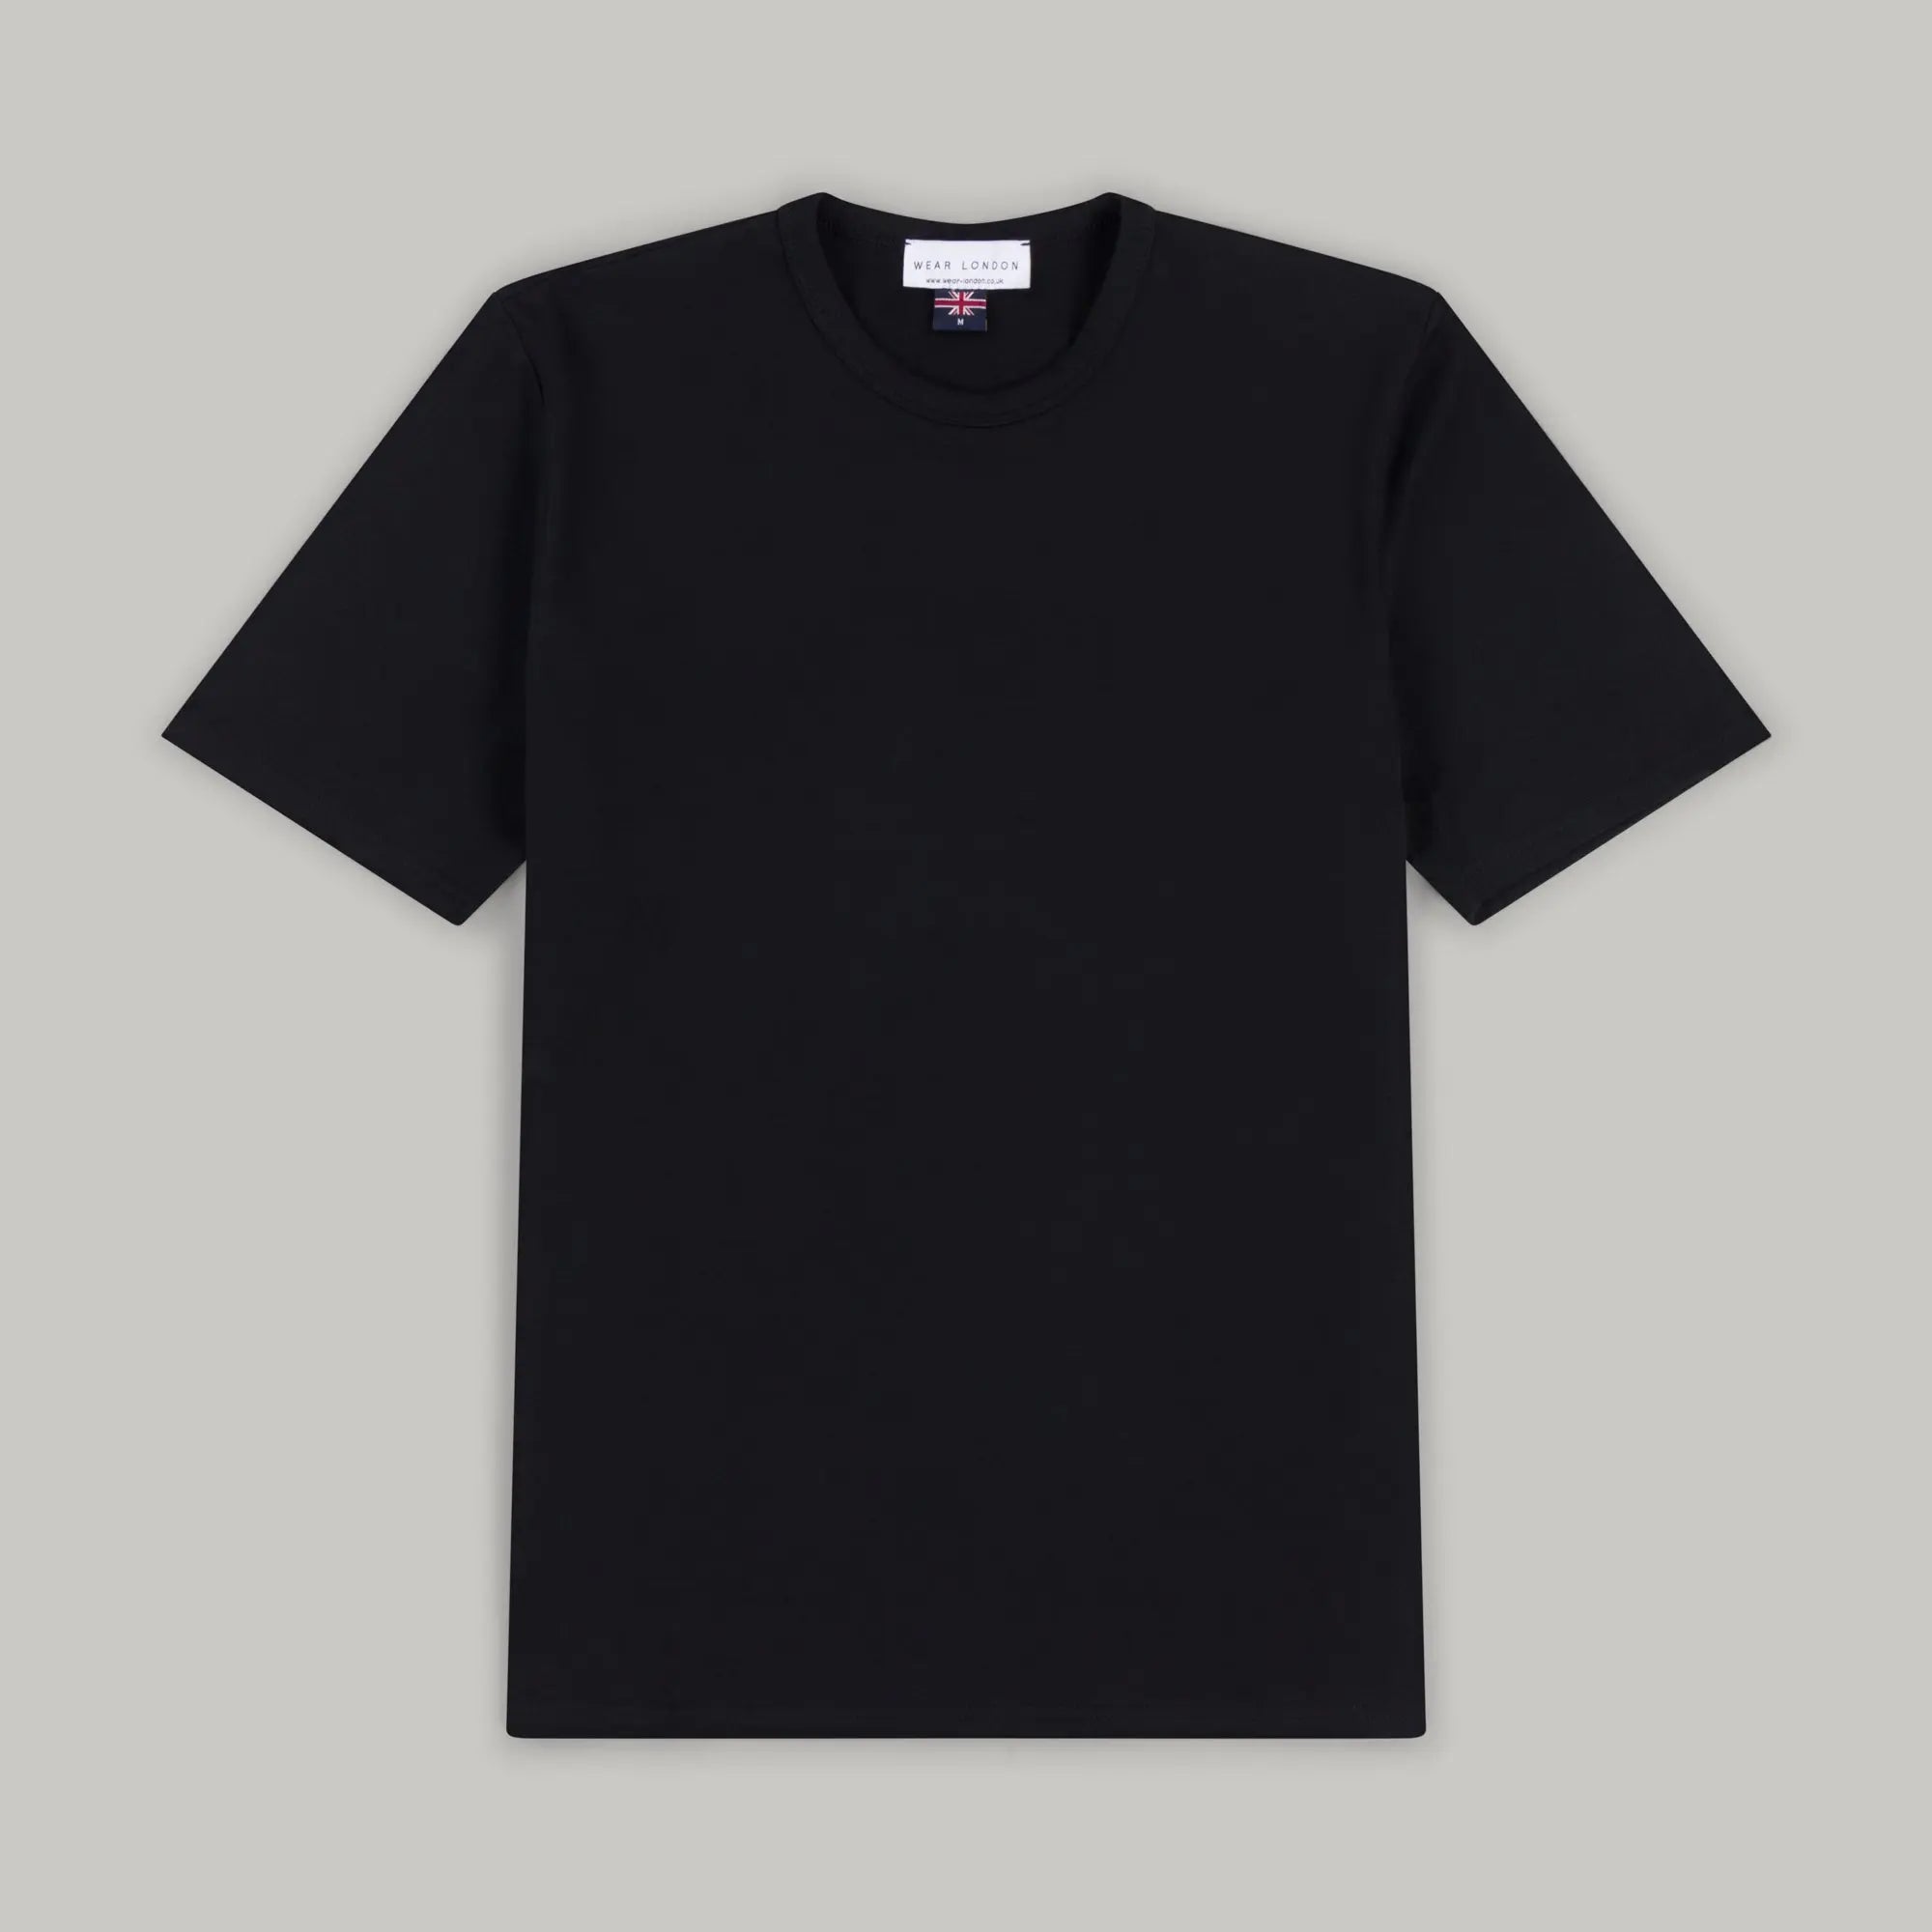 Trueman Short Sleeve Tee Shirt - Black